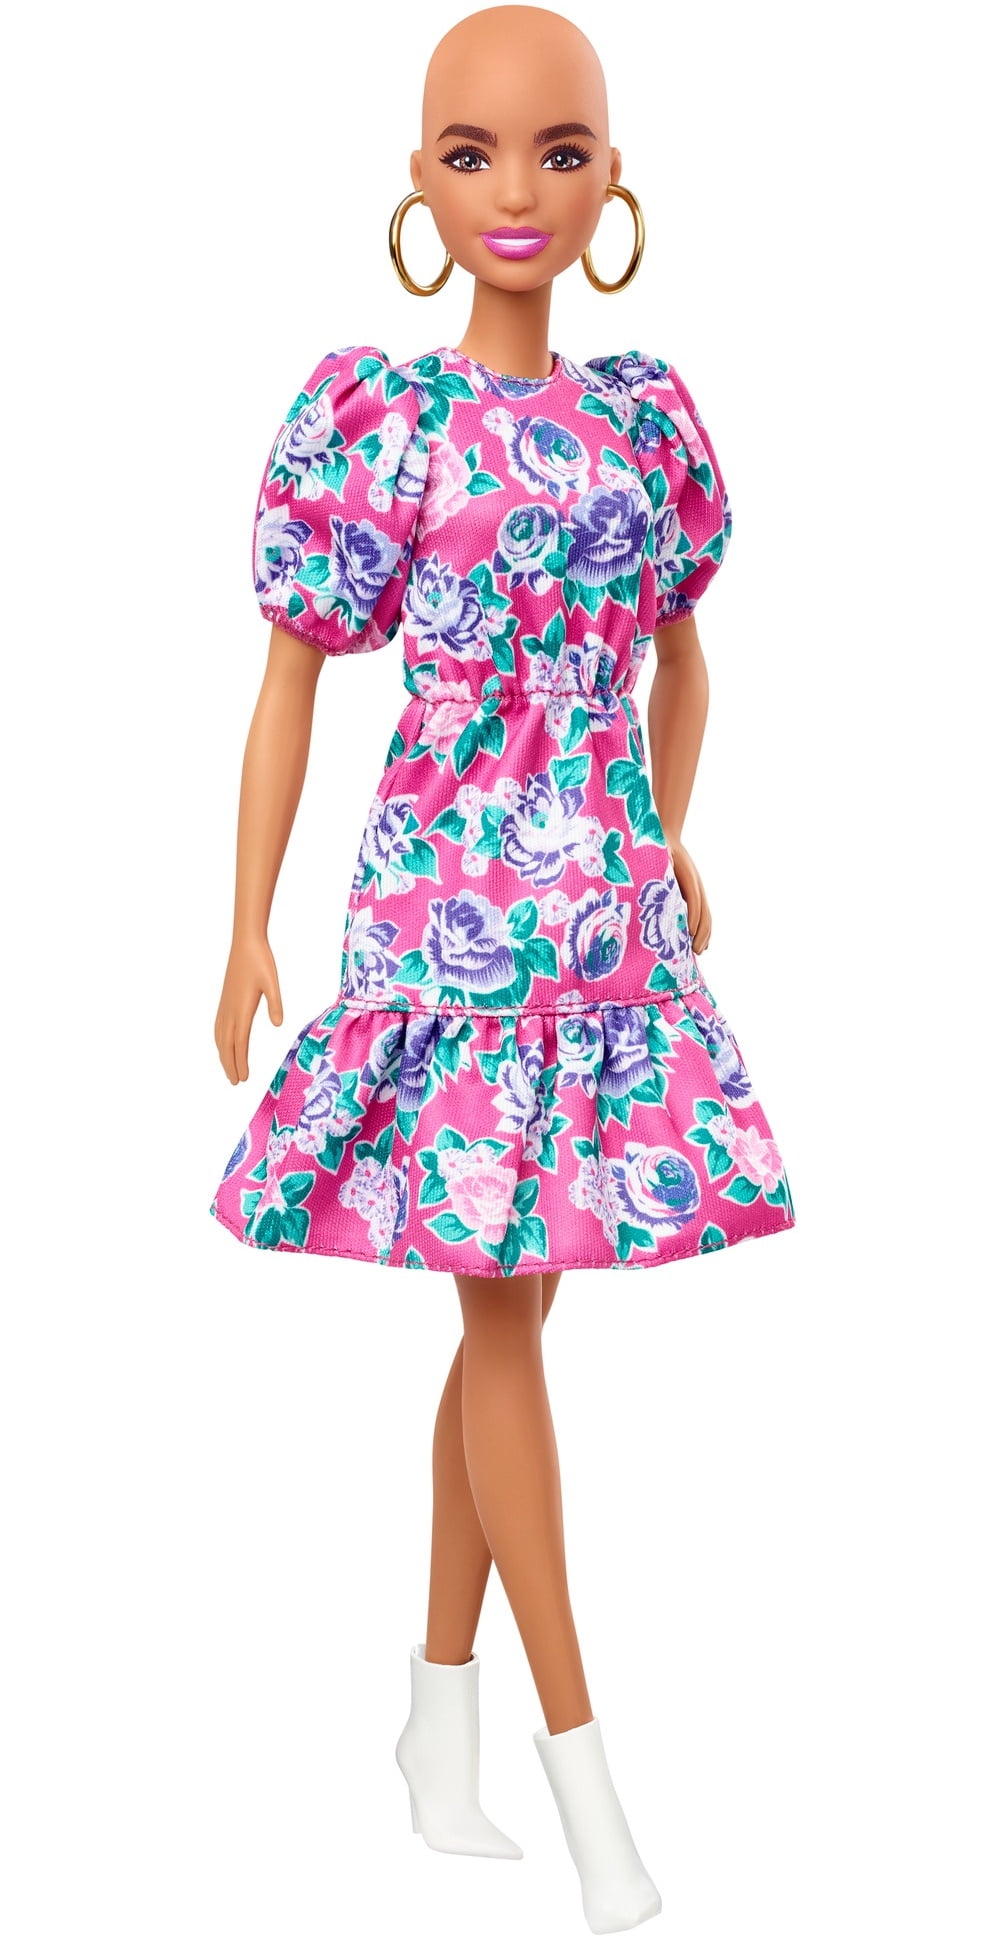 NEW PINK & BLACK SNAKESKIN PRINT DRESS for Barbie doll 